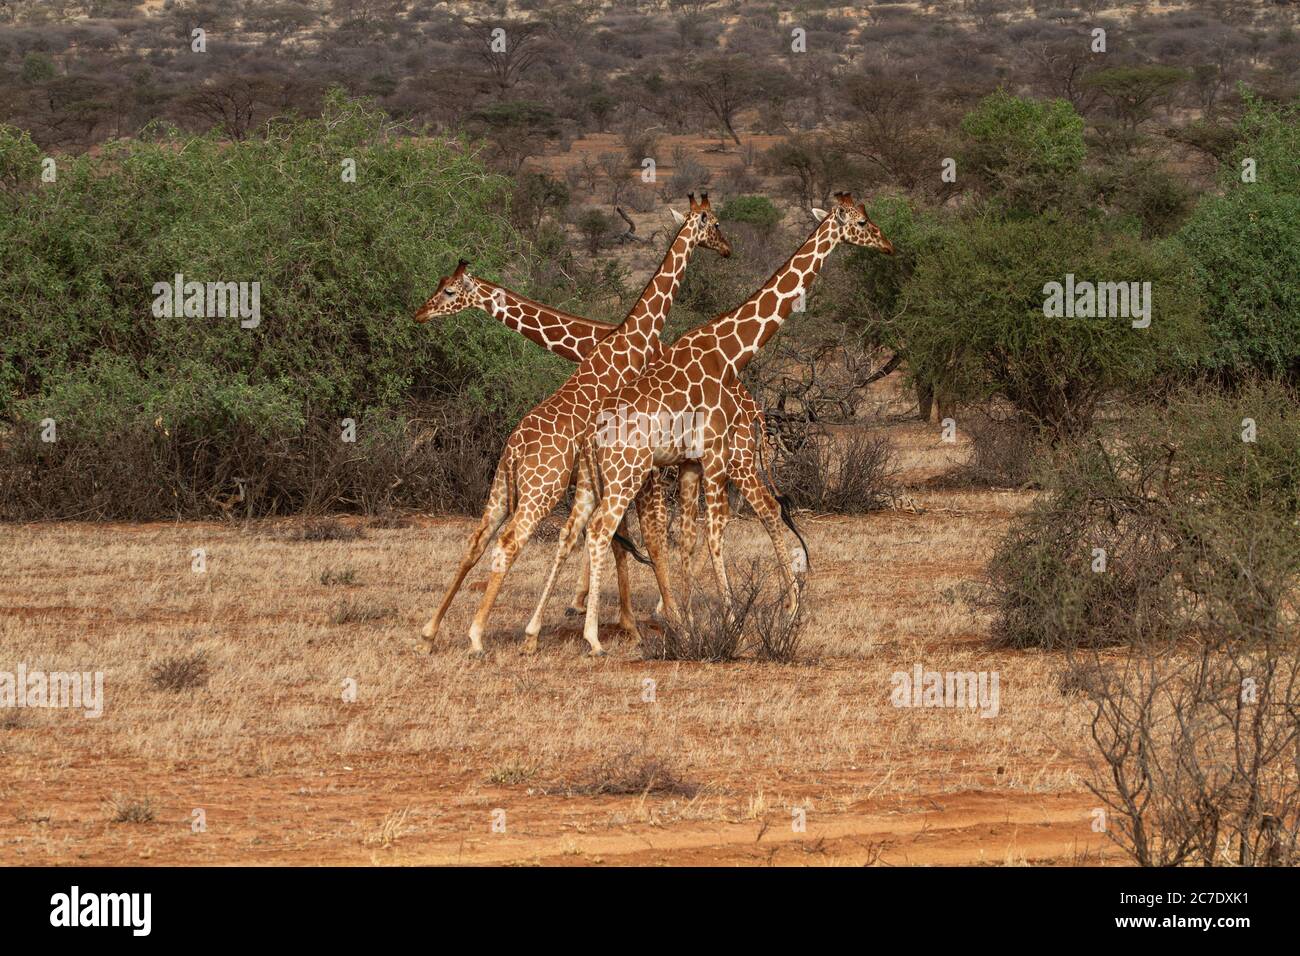 Rothschild's giraffe (Giraffa camelopardalis rothschildi) Stock Photo